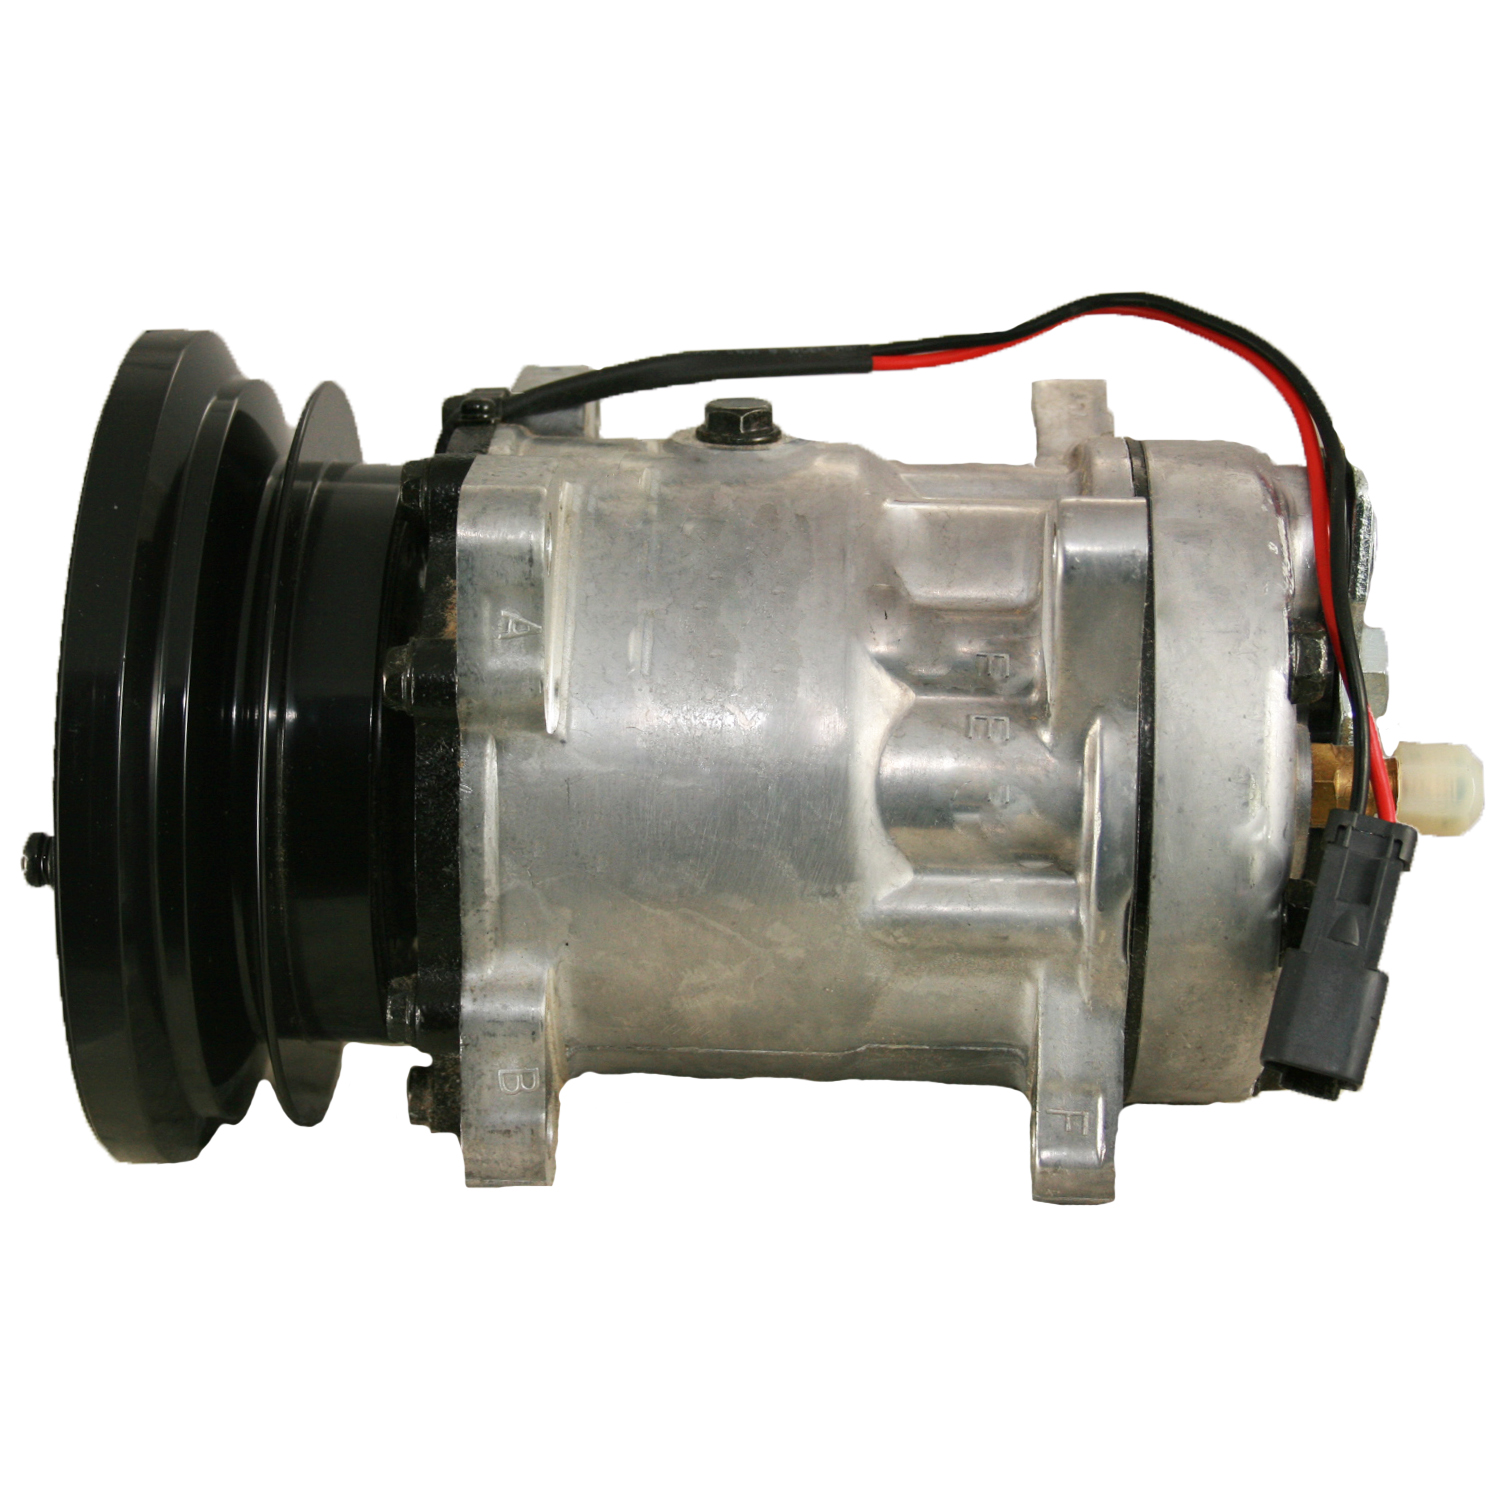 TCW Compressor 40573.101NEW New Product Image field_60b6a13a6e67c